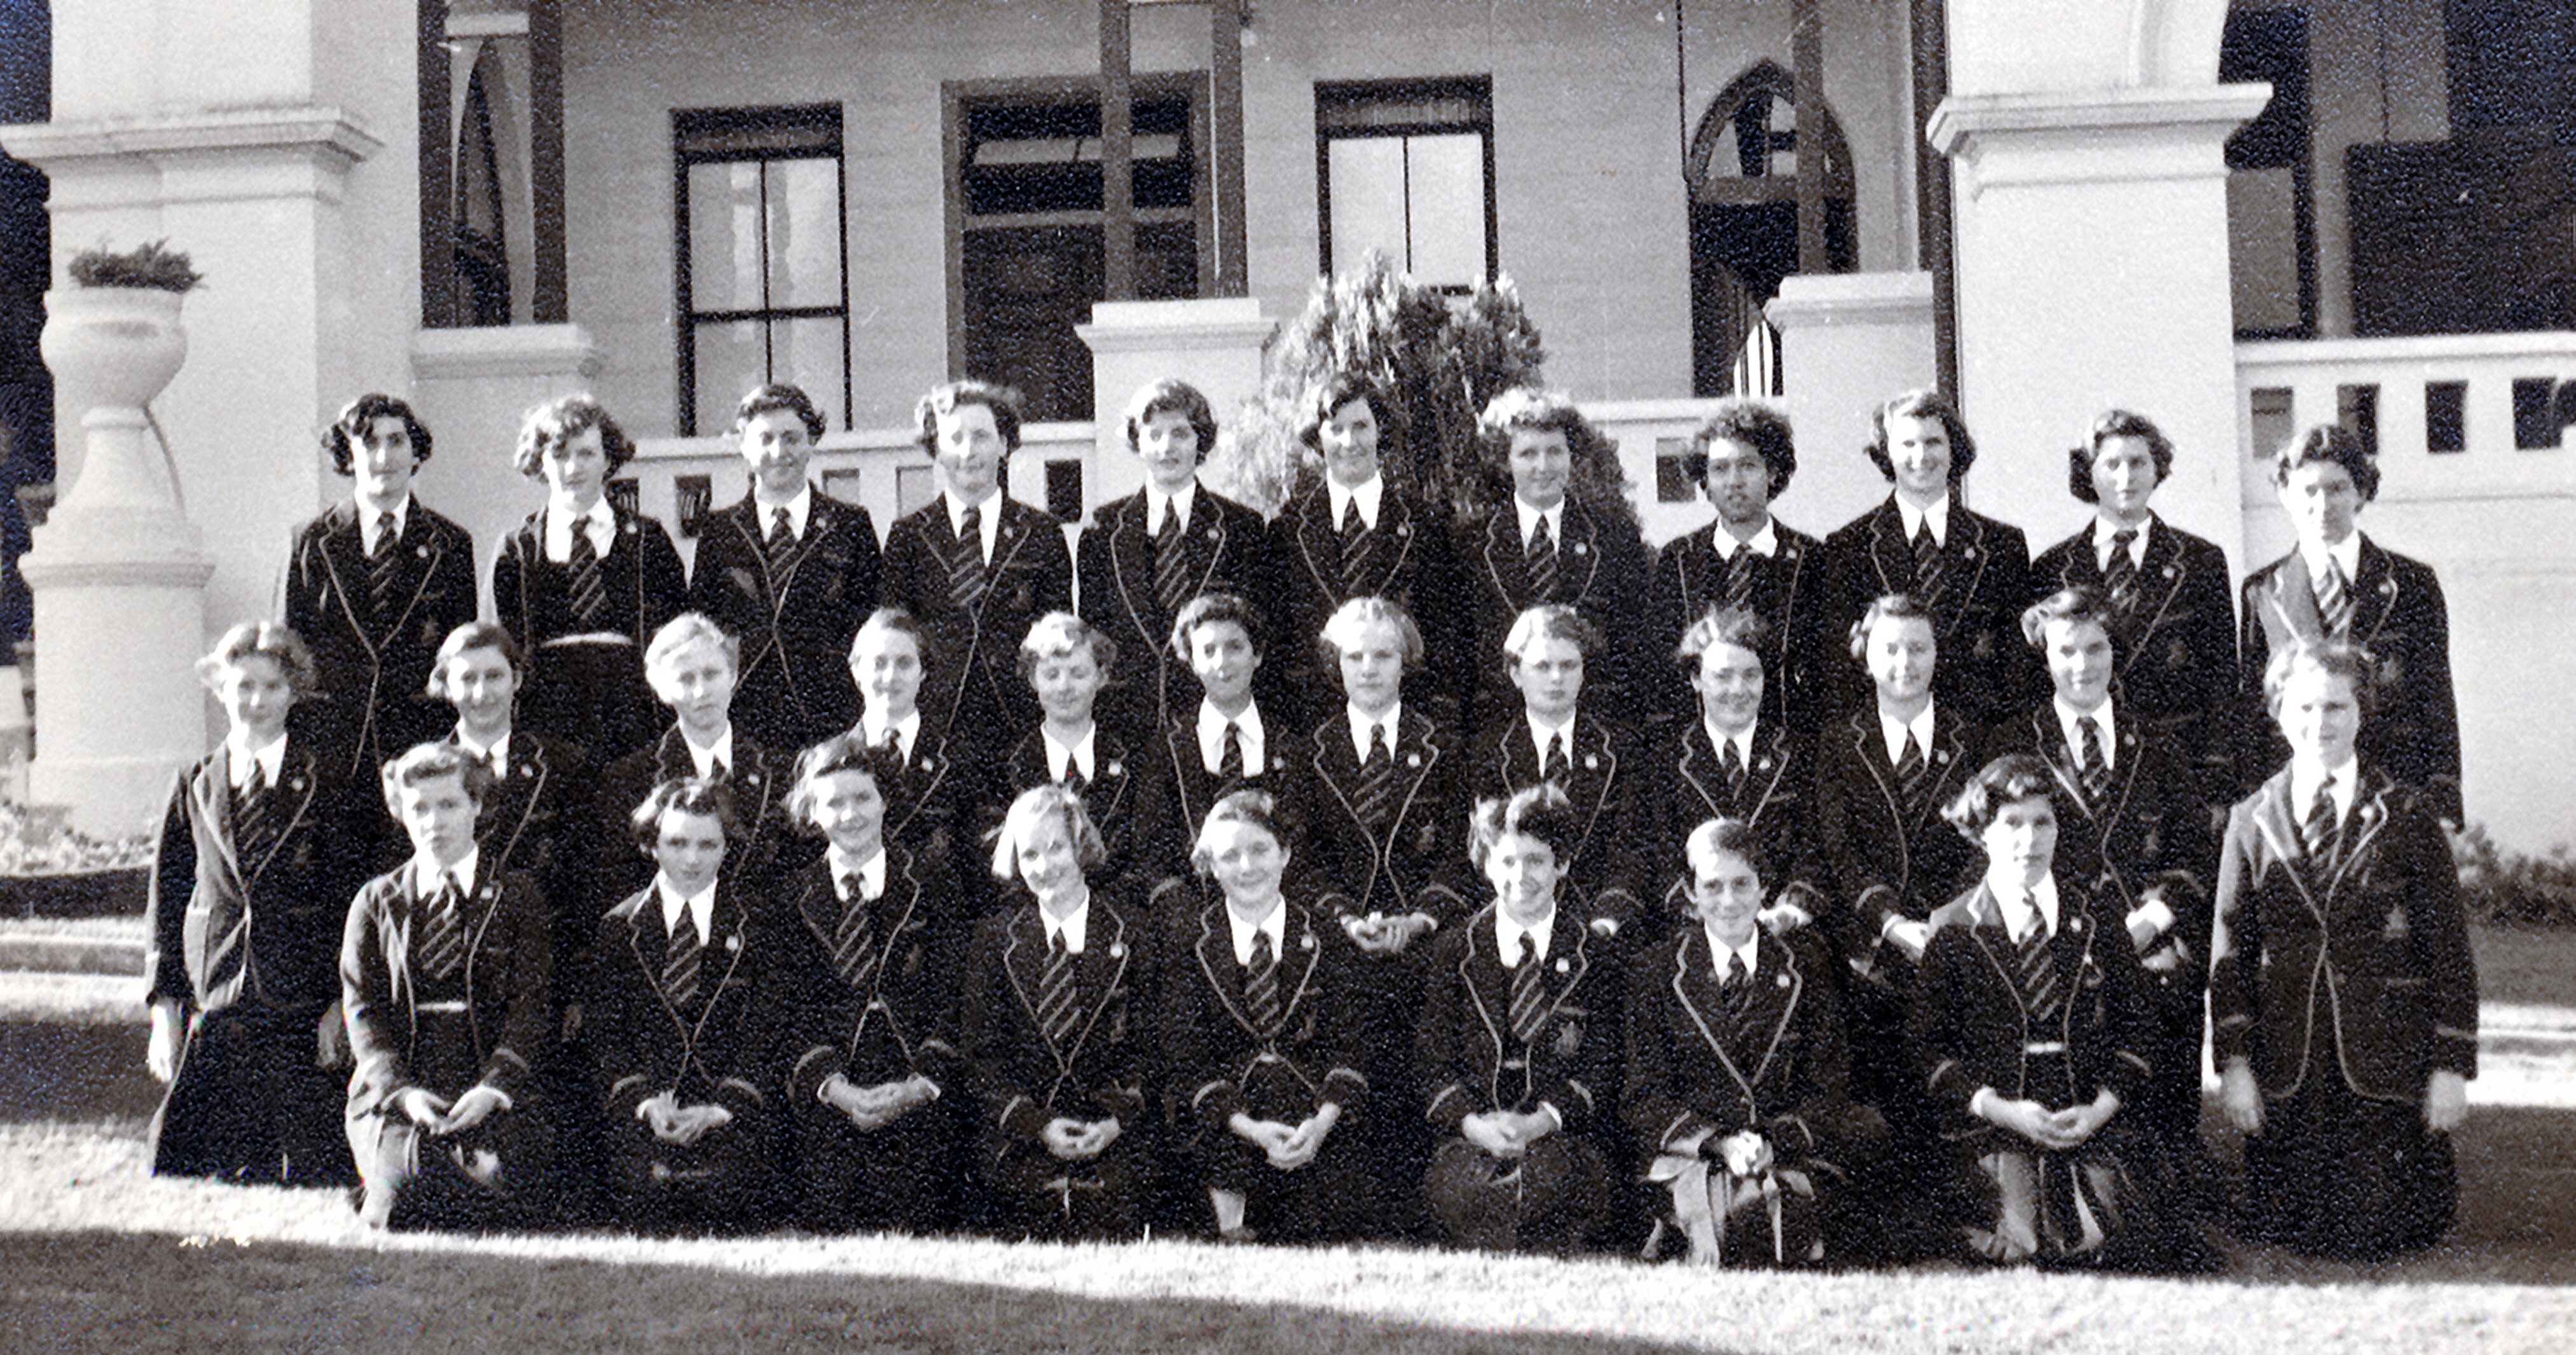 1954 Seniors